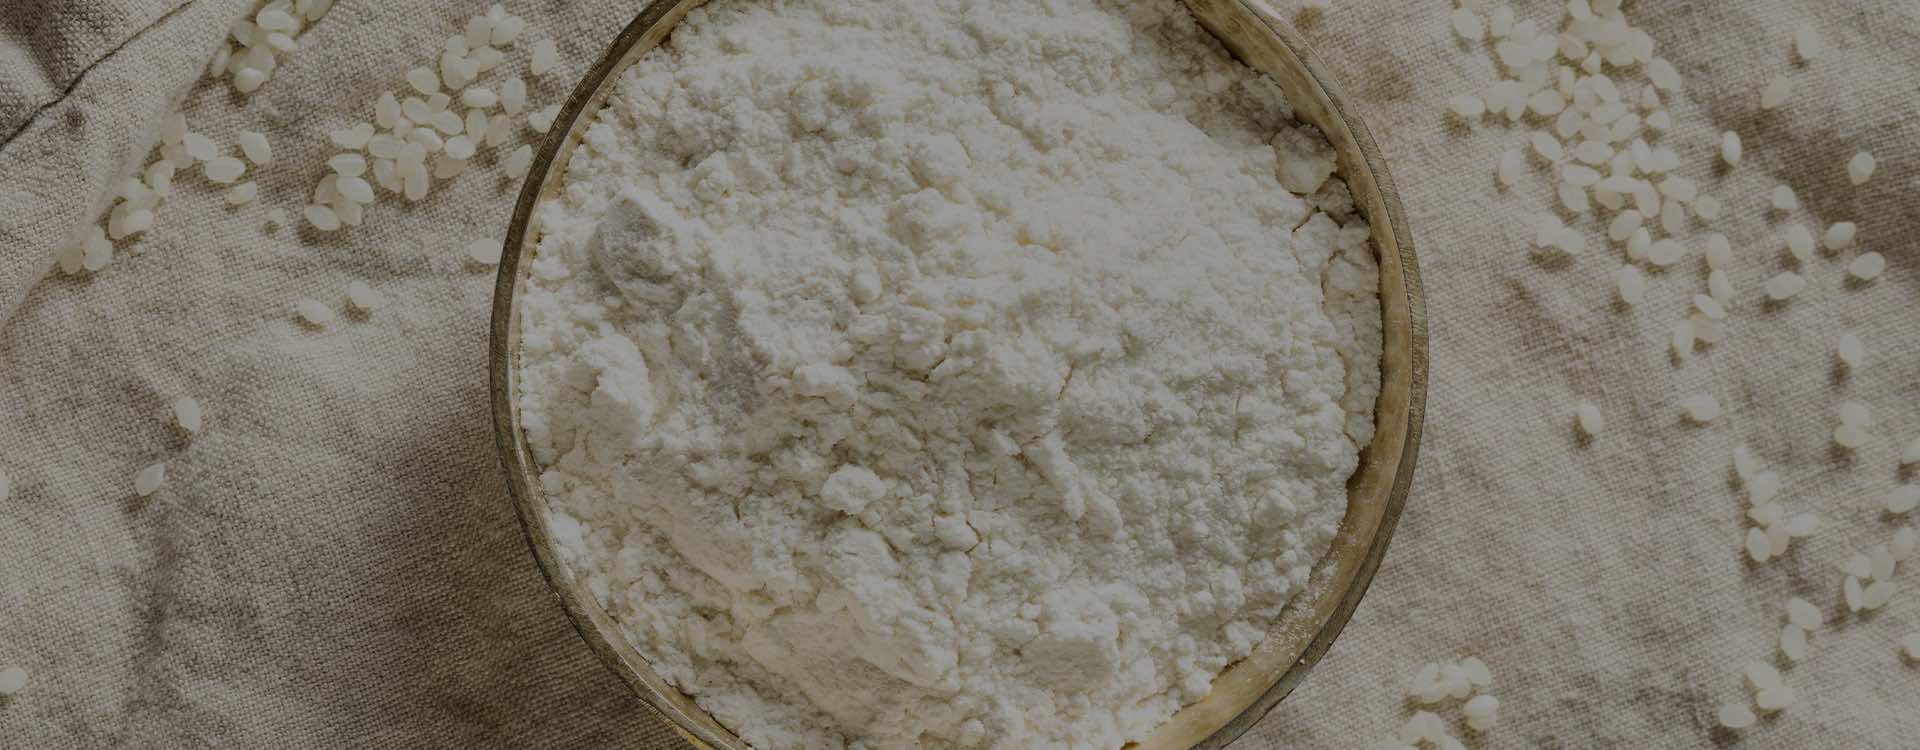 Slide: Japanese Rice Flour